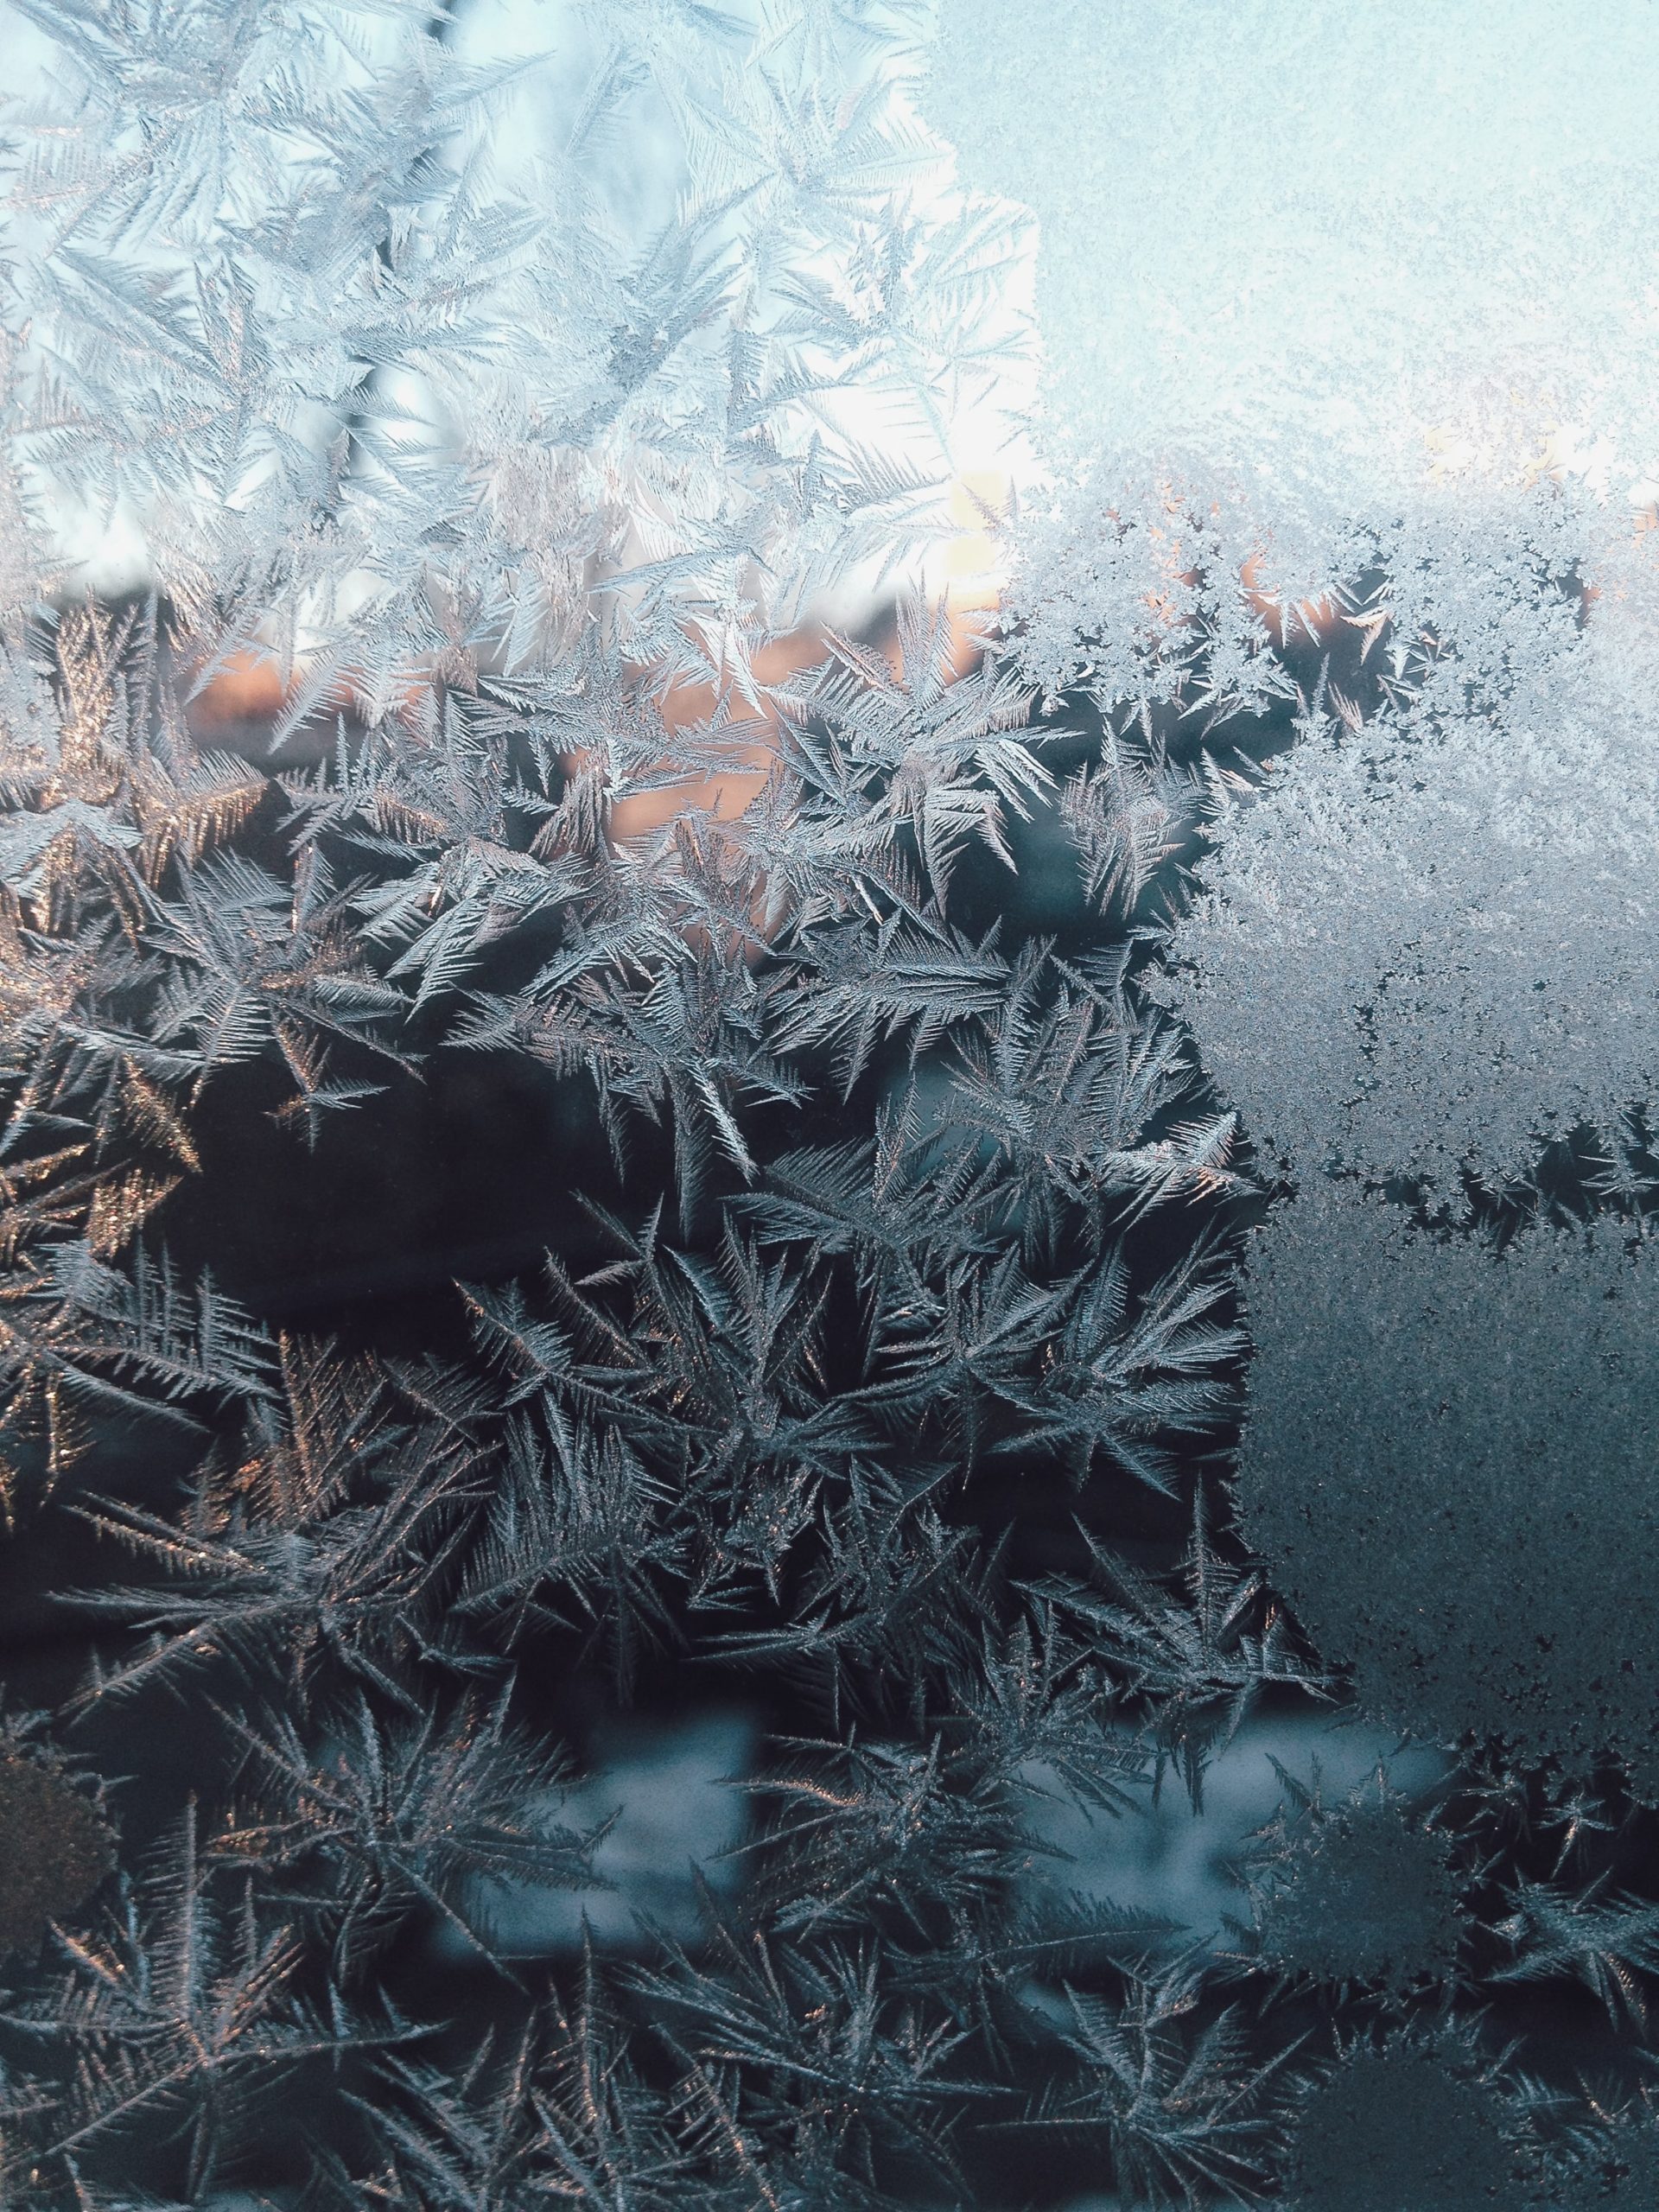 life patterns shown through closeup of ice freezing on a lake